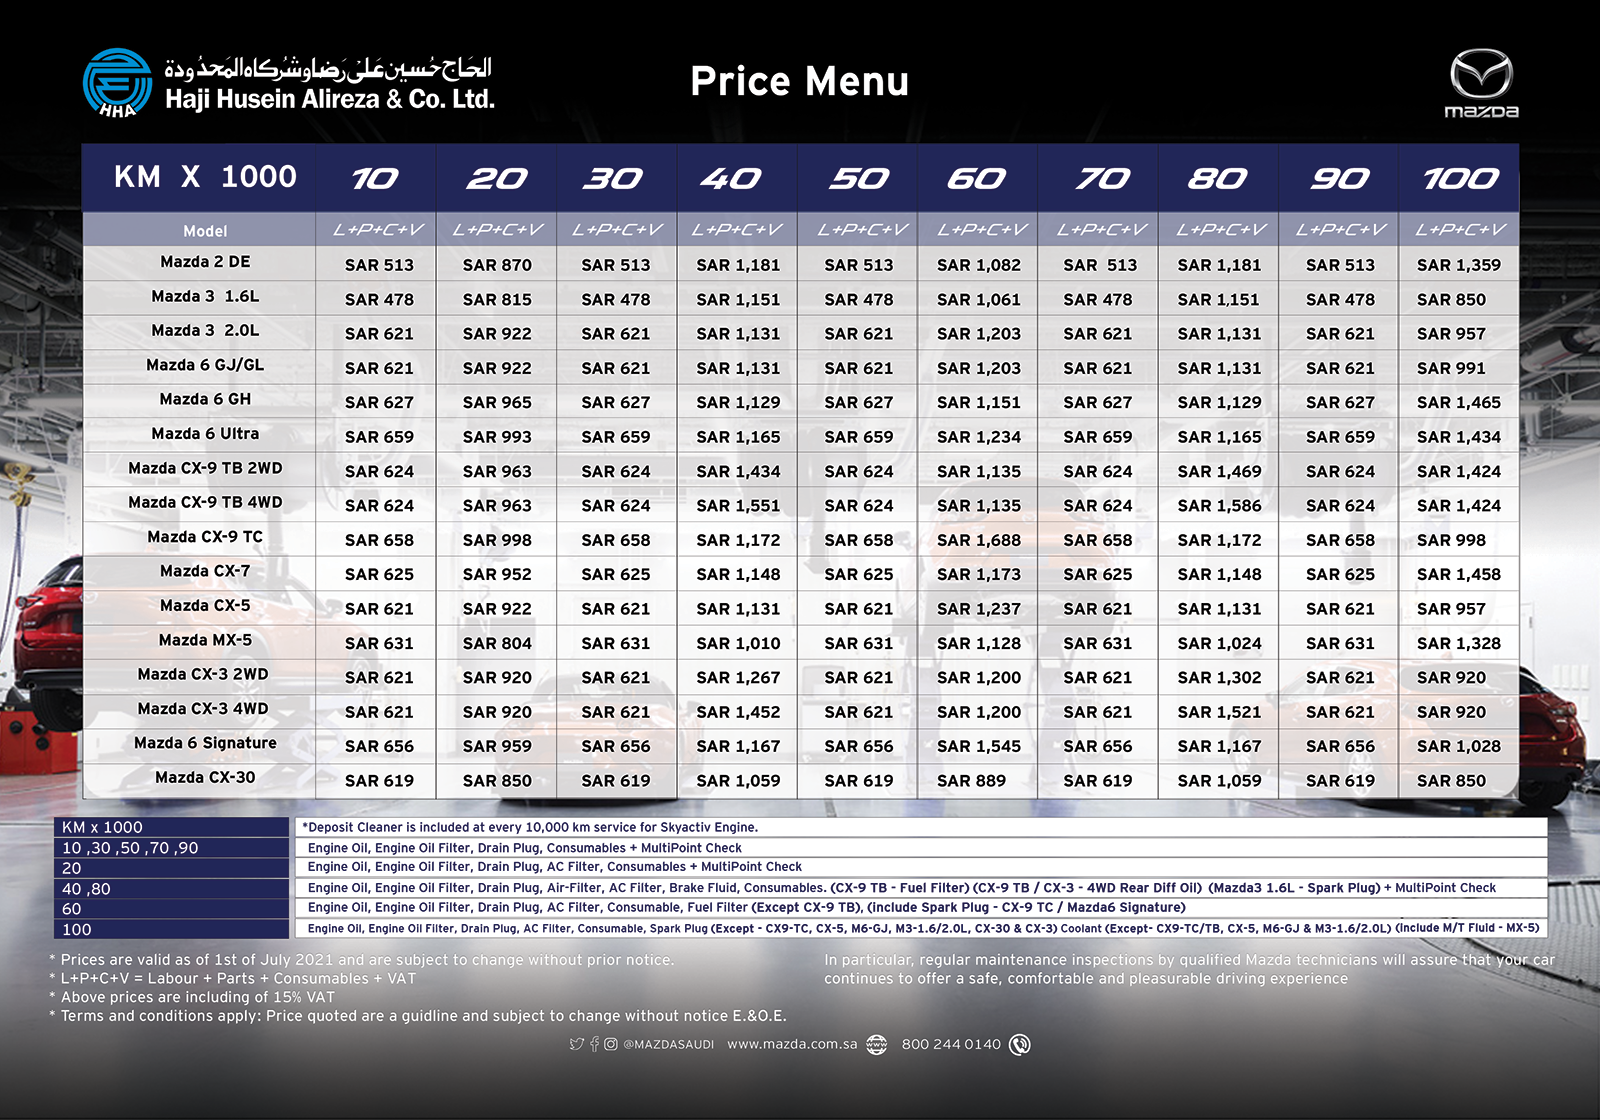 Mazda Service Price Menu